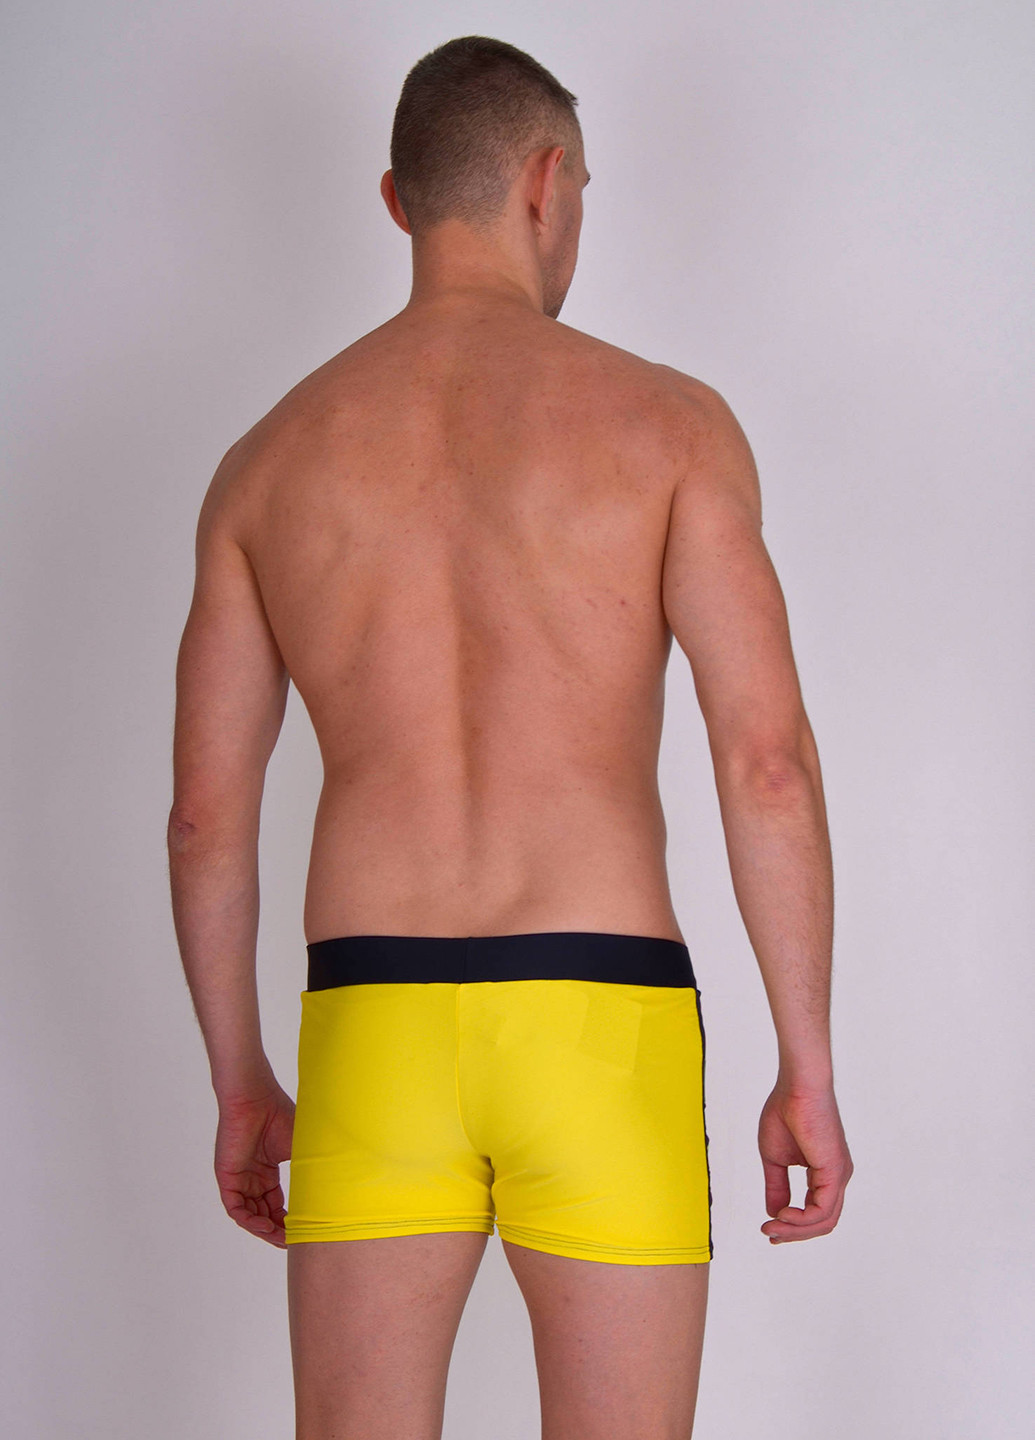 Мужские желтые пляжные плавки шорты Uomo Mare